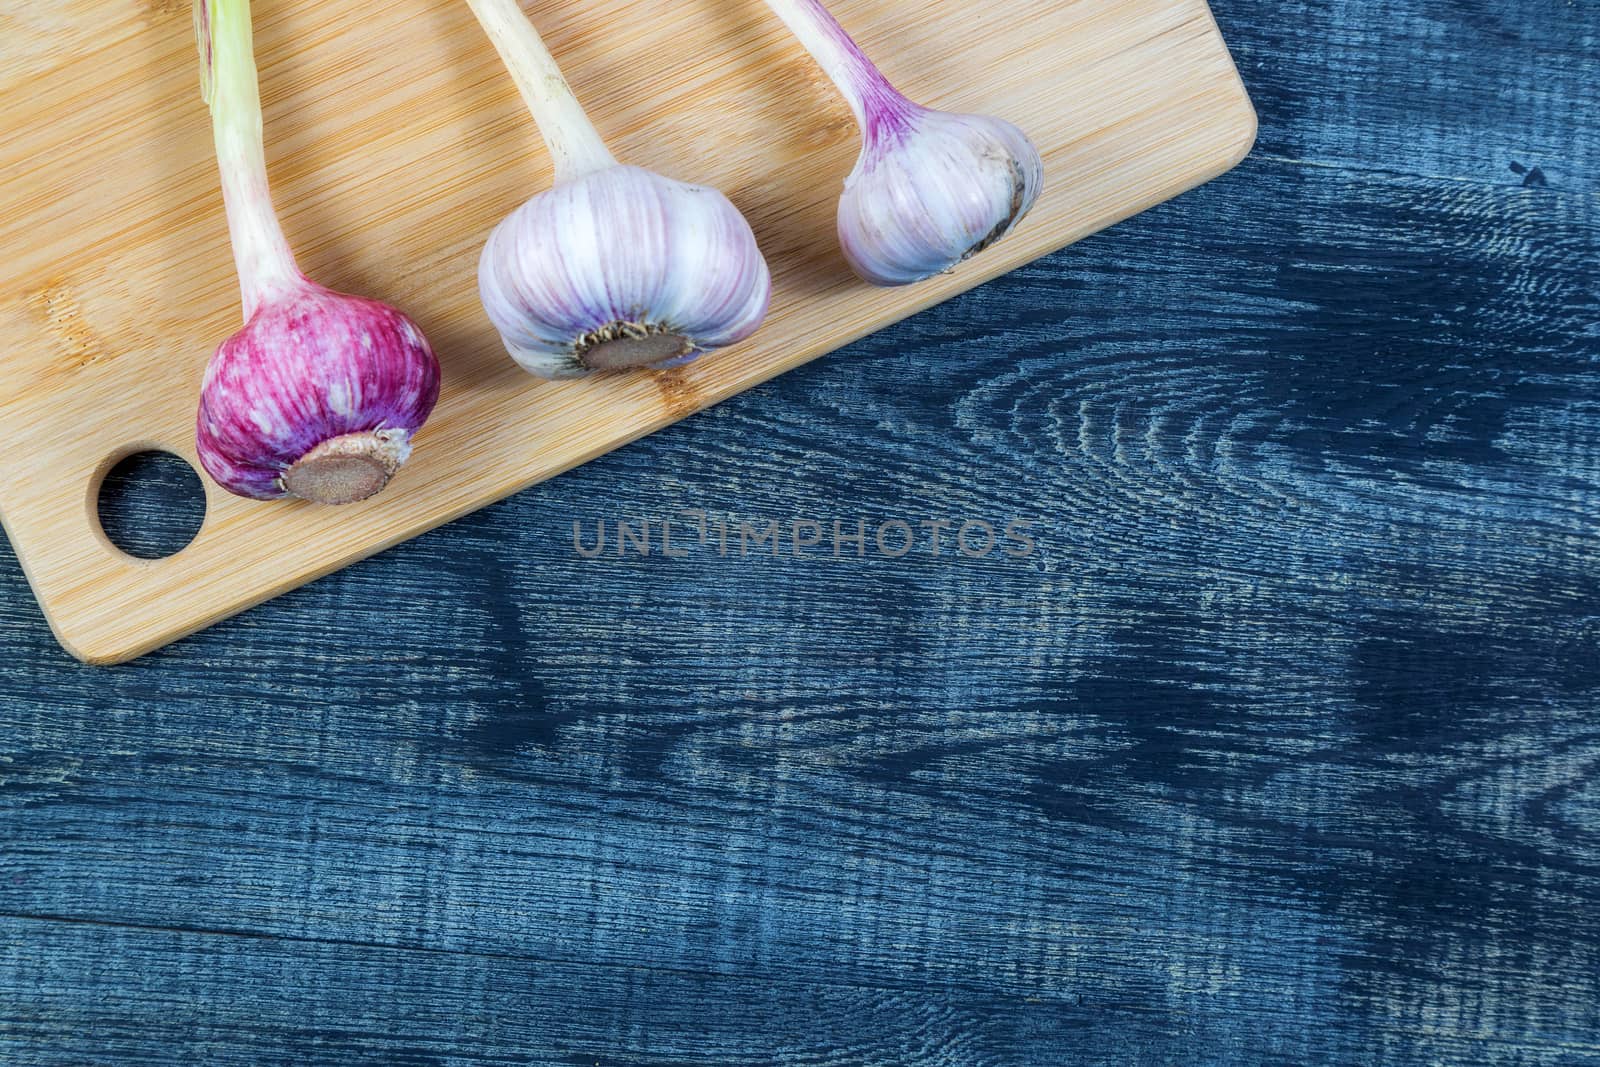 High Angle Still Life View of garlic on Wooden Cutting Board by galinasharapova